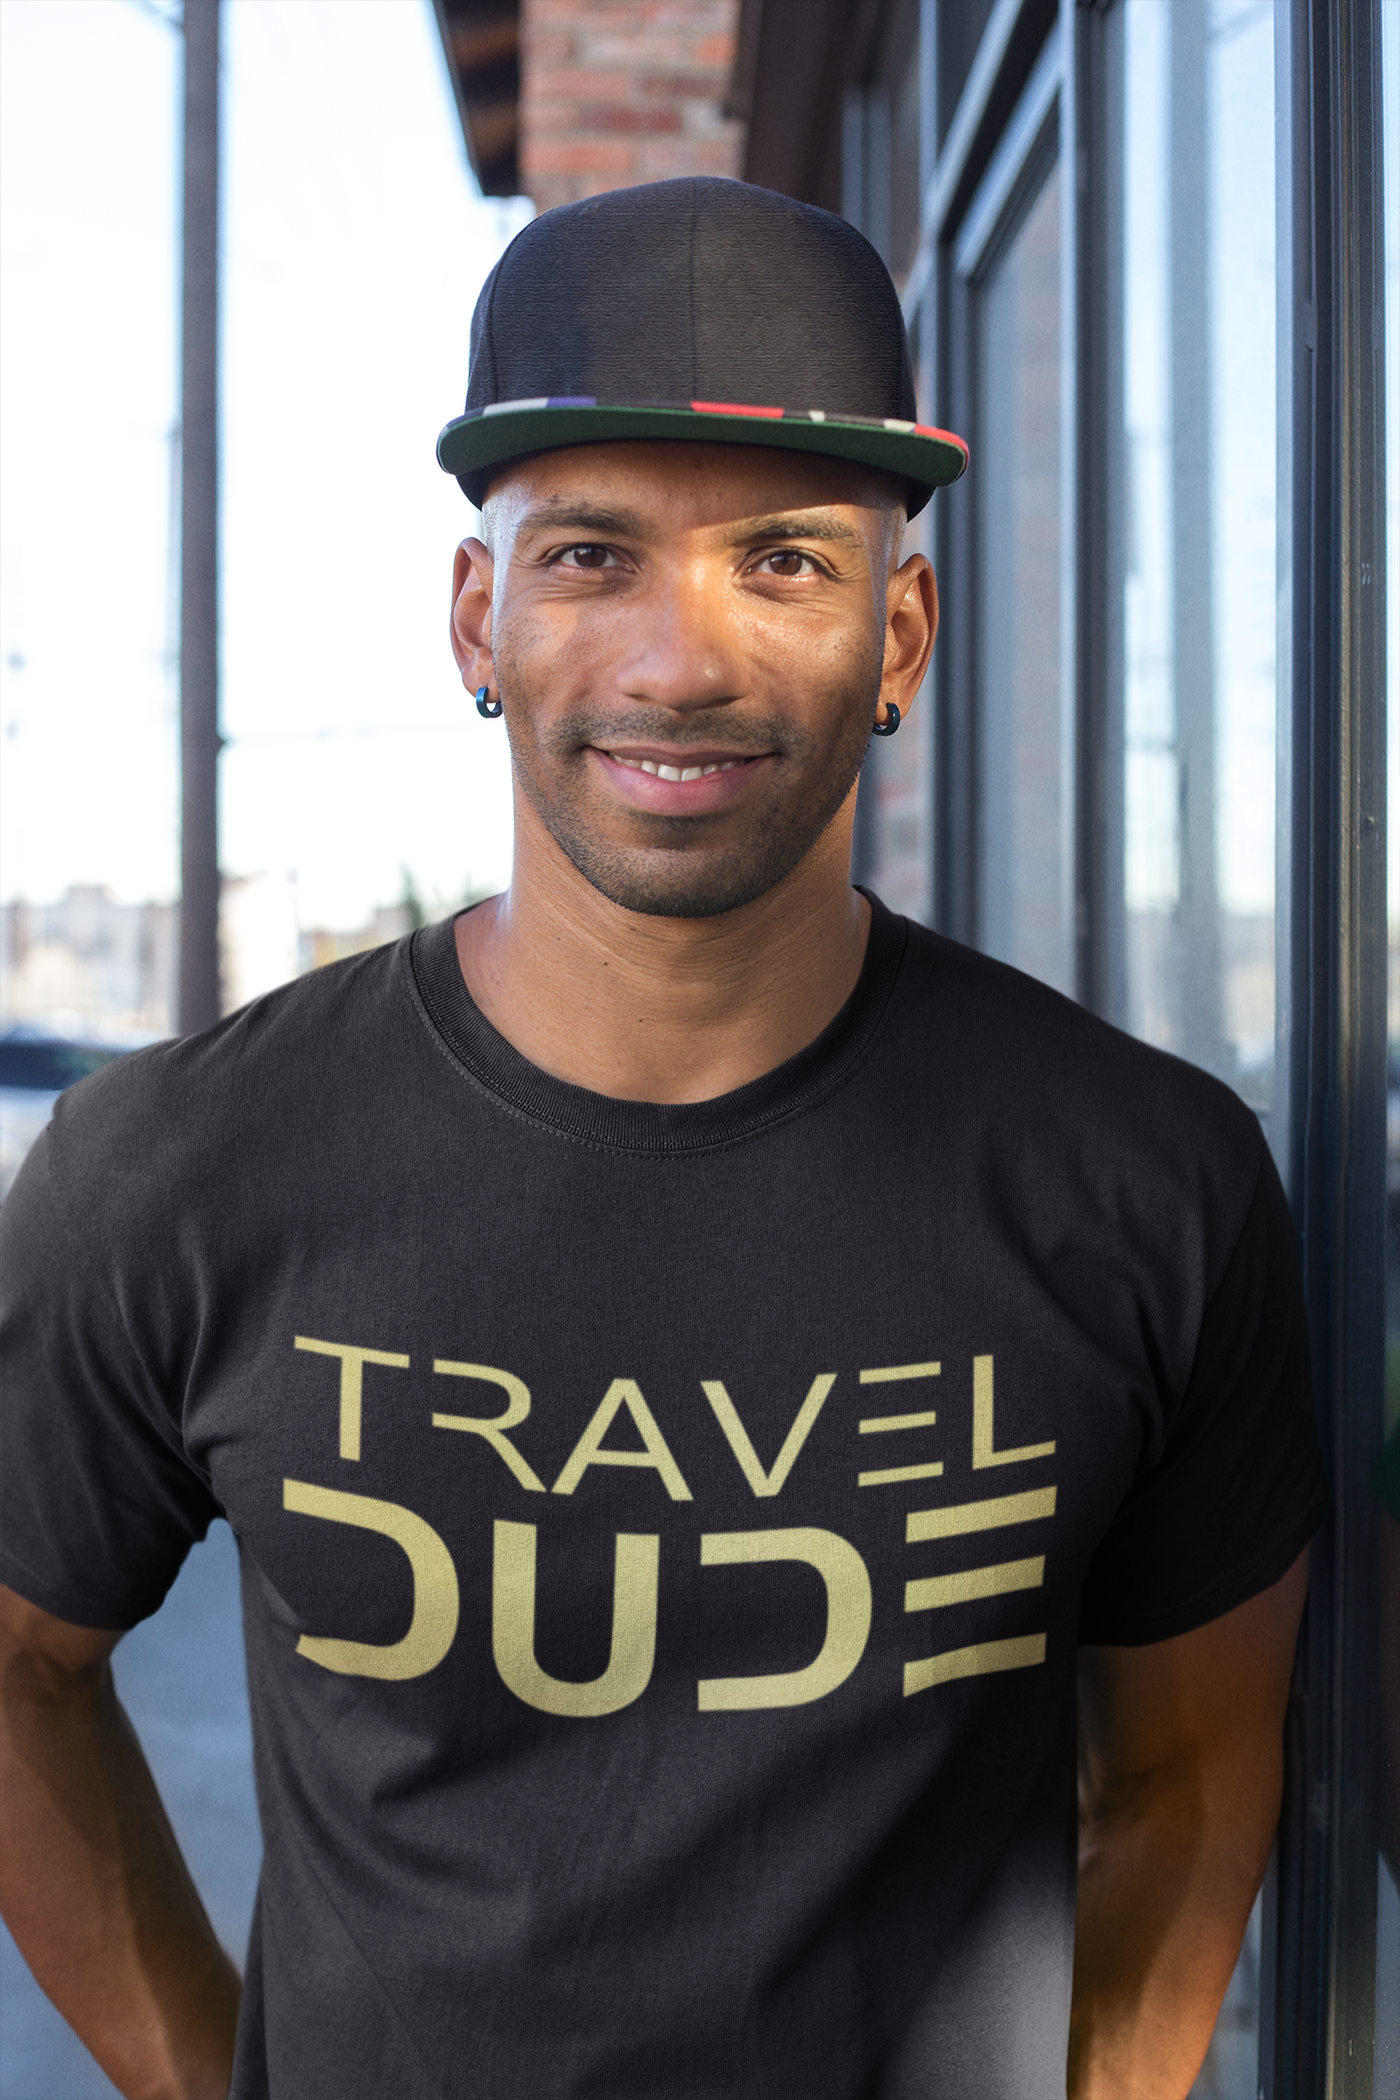 Travel Dude Gold Foil Shirt